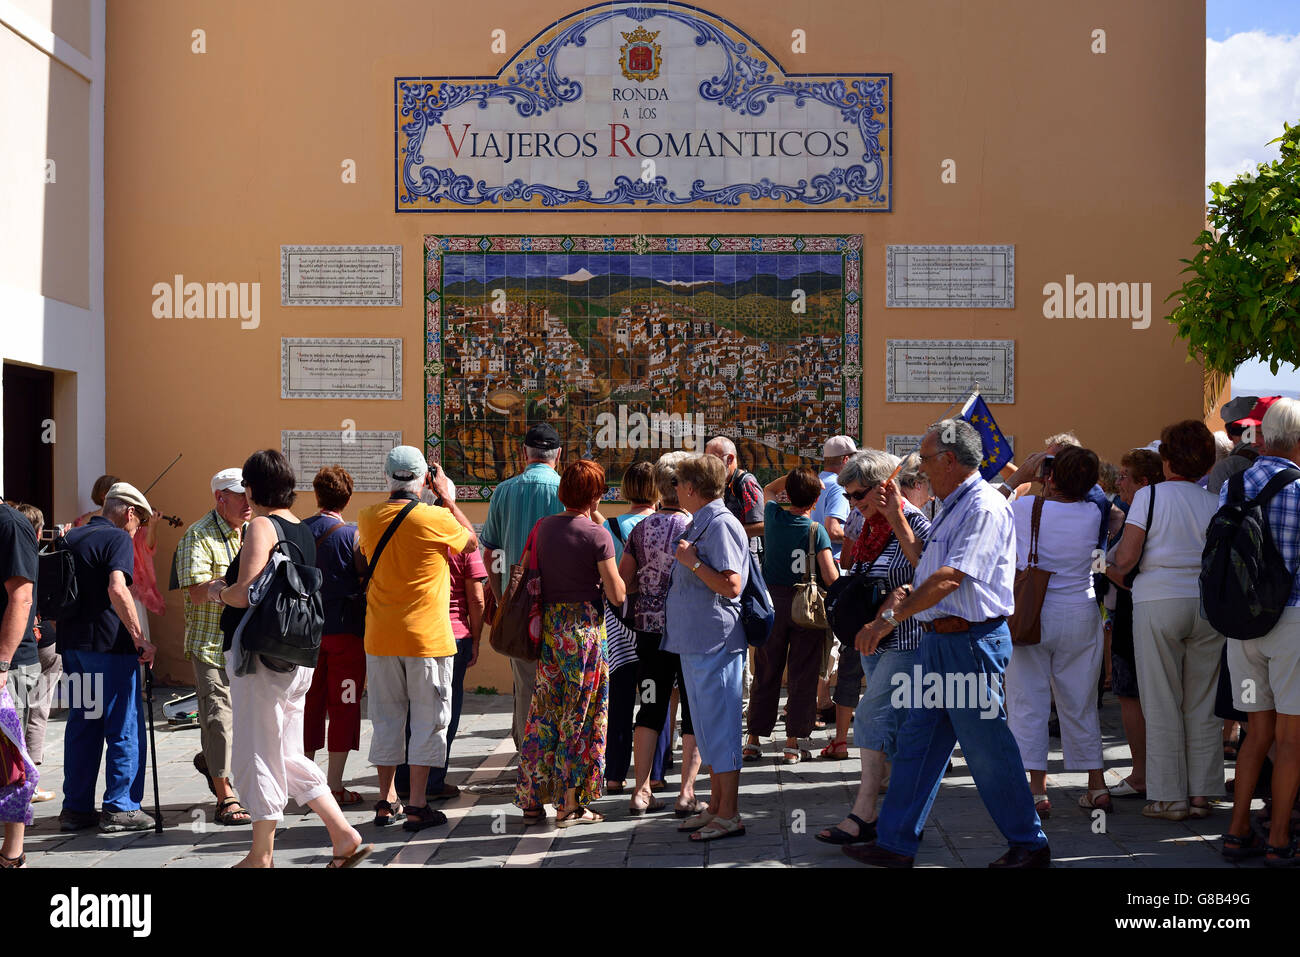 wallpainting (tiles), Calle Arminan, old town (La Ciudad), Ronda, Andalusia, Spain Stock Photo